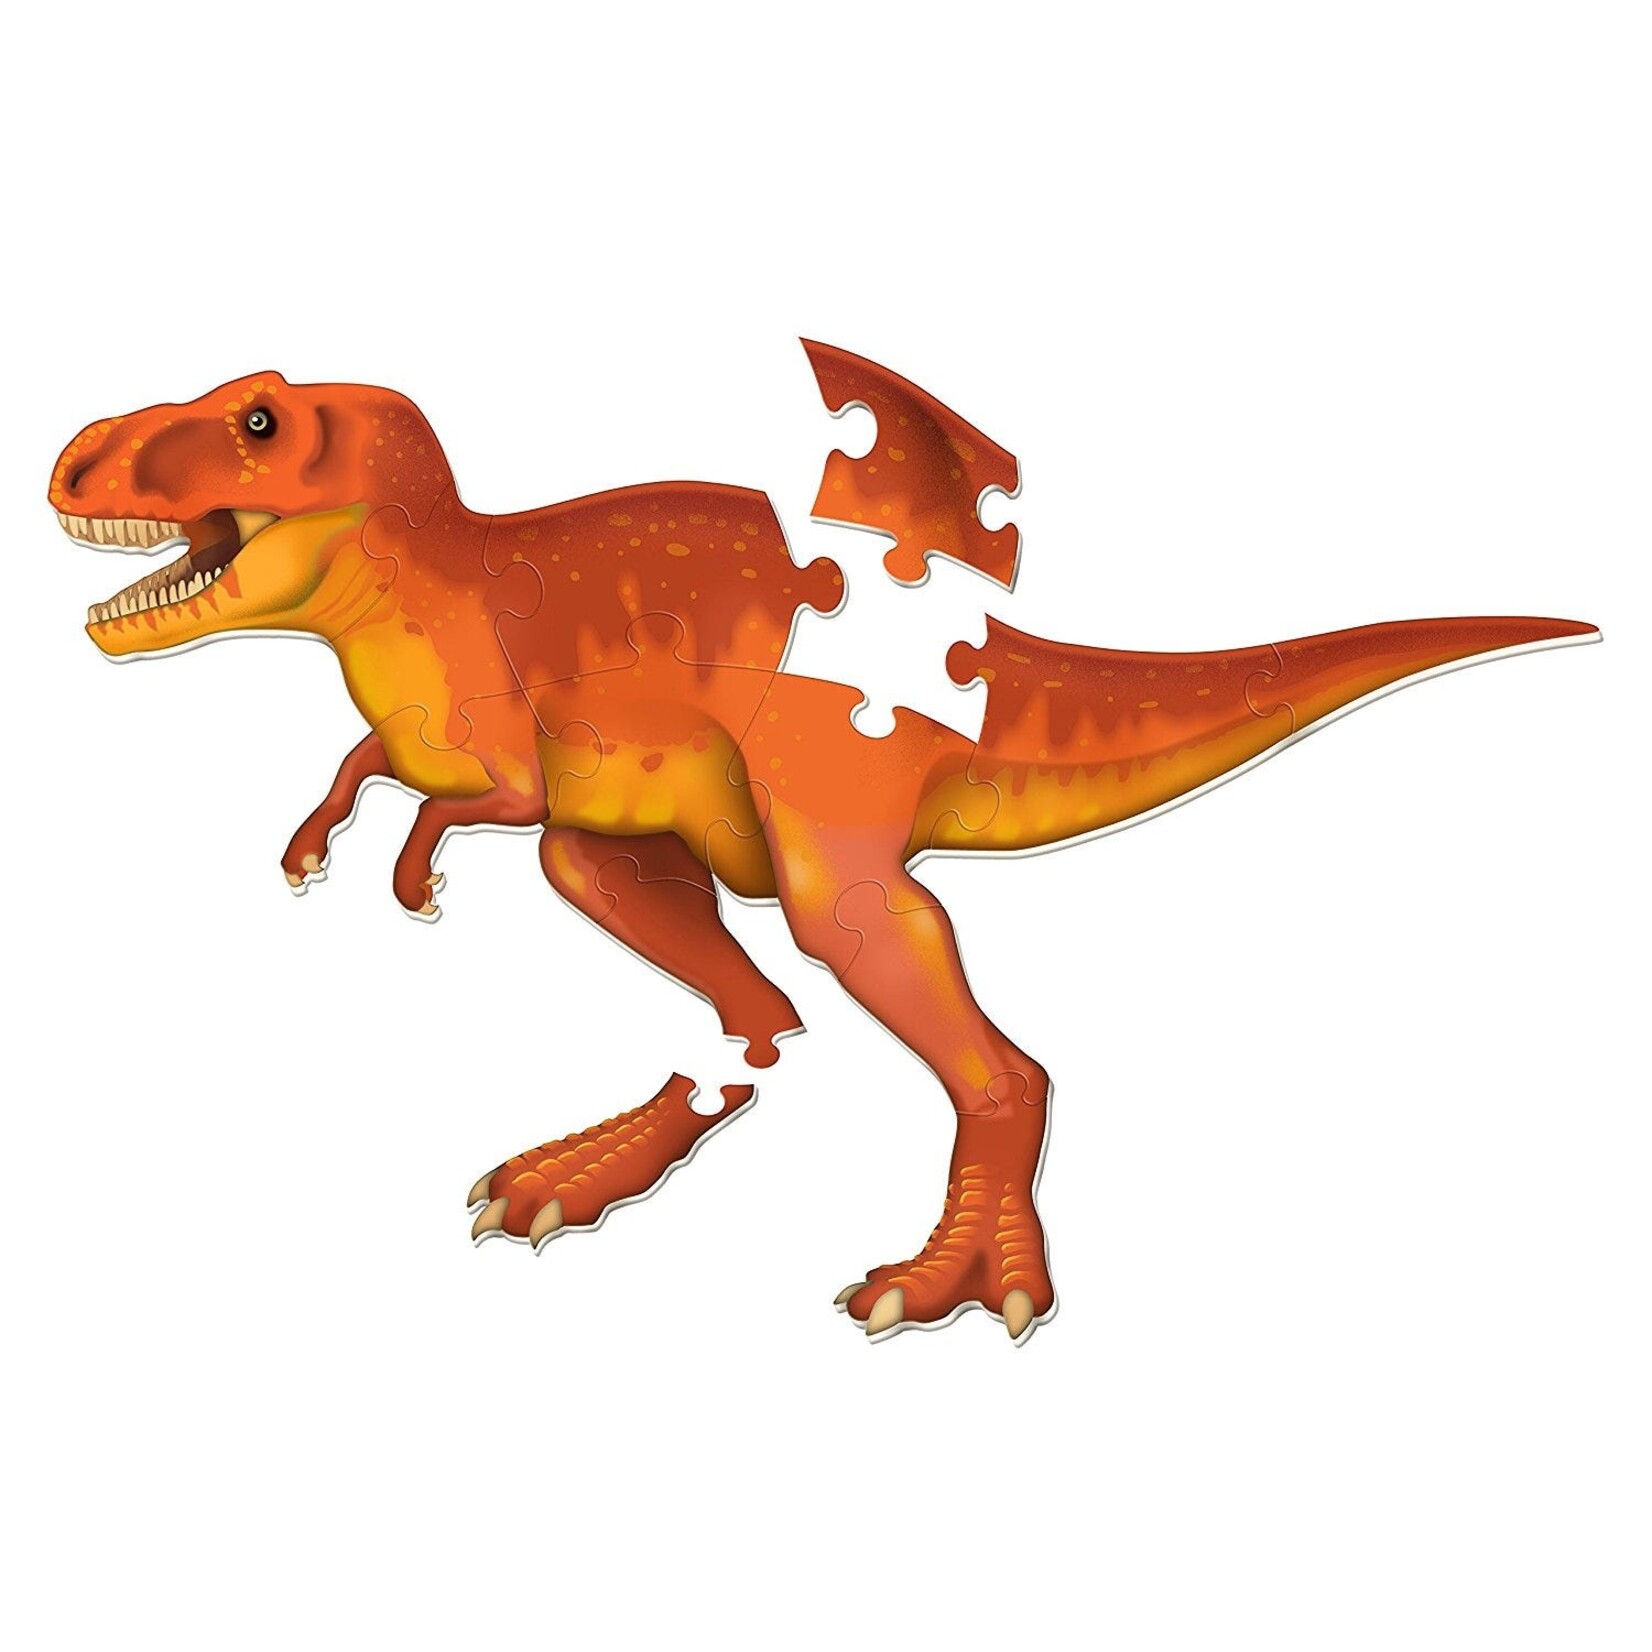 LEARNING RESOURCES INC Jumbo Dinosaur Floor Puzzle T-Rex